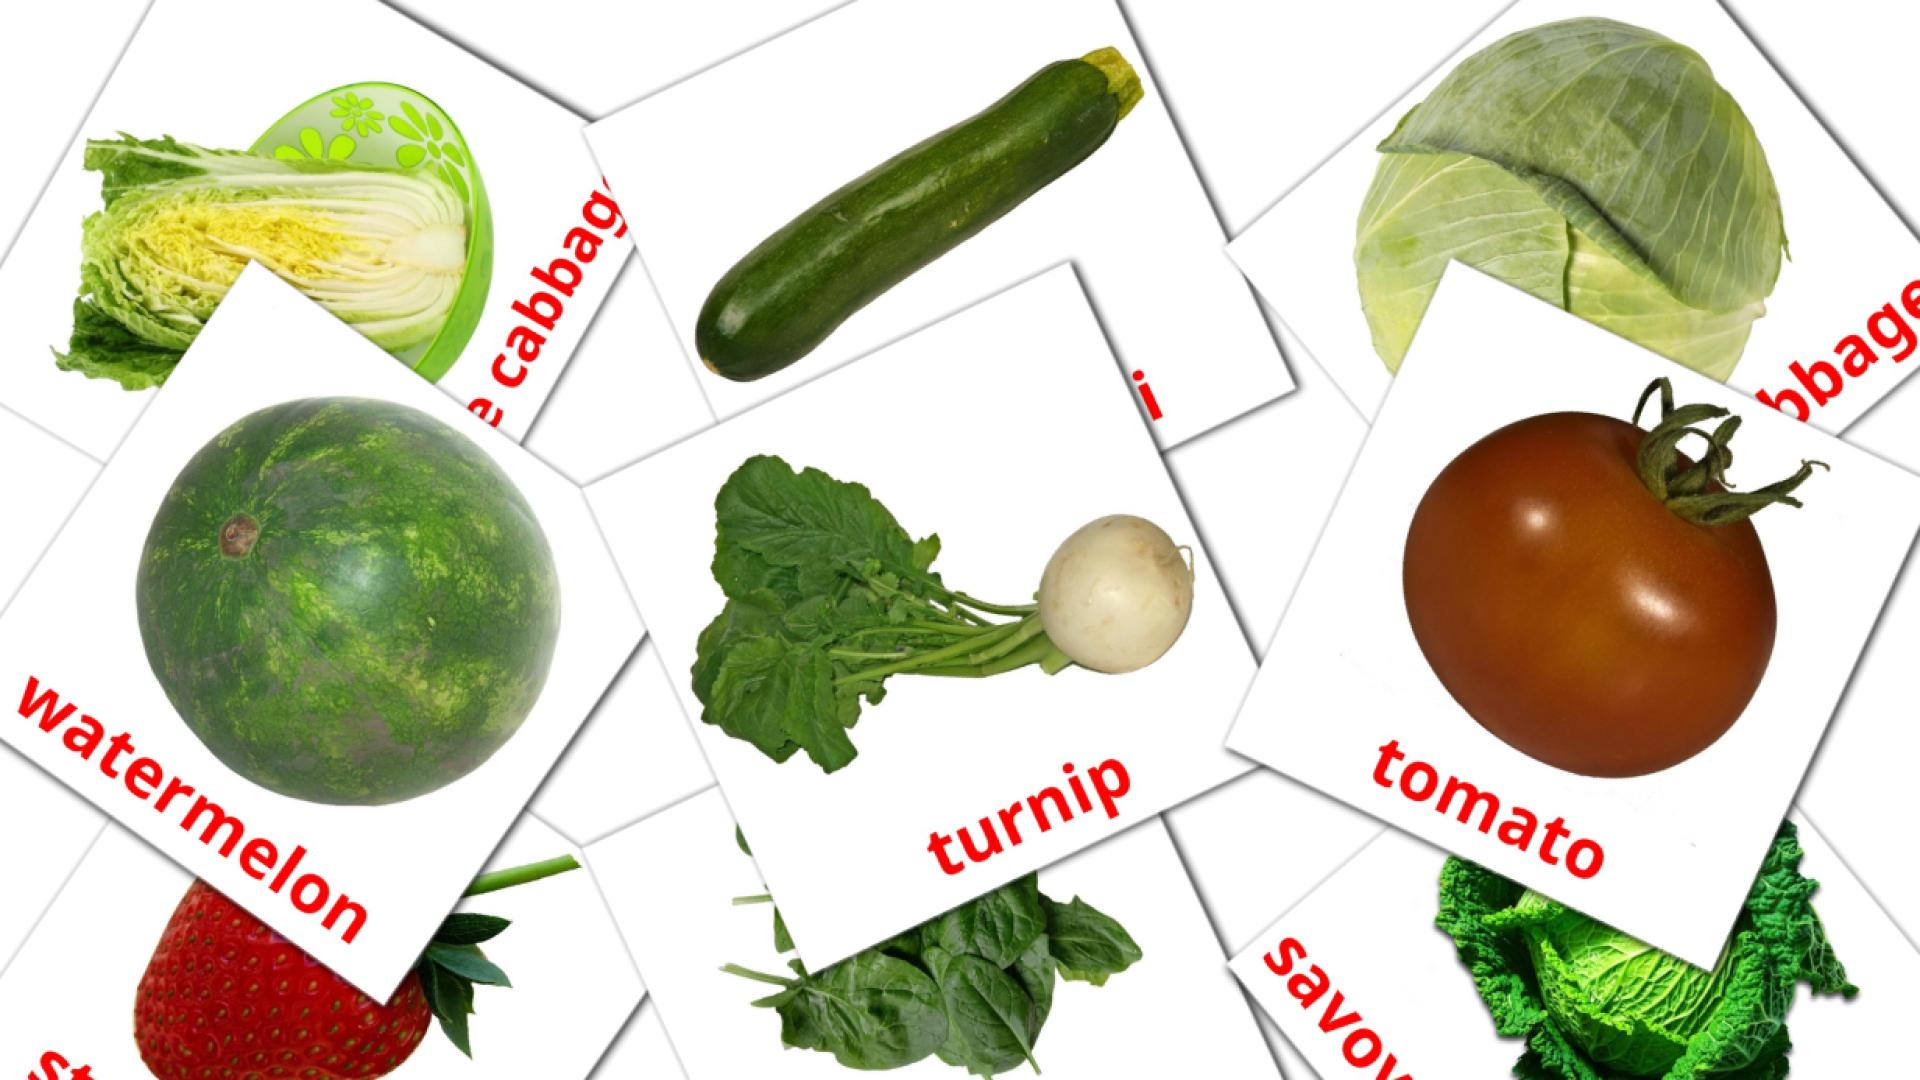 Food cantonese(Colloquial) vocabulary flashcards